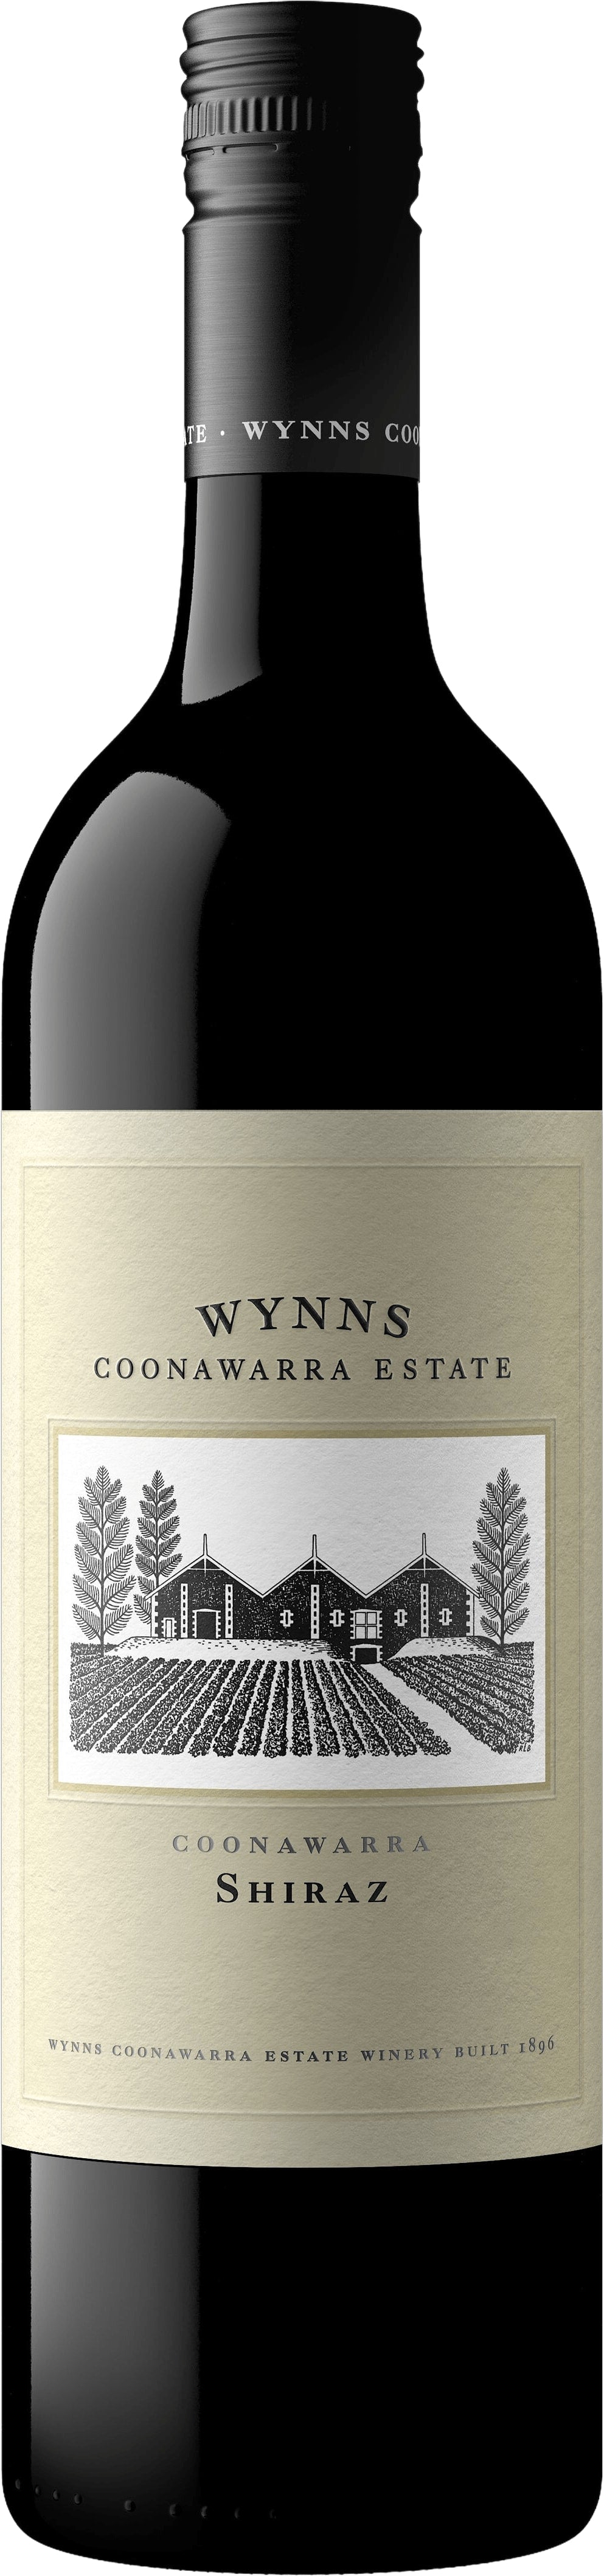 Wynns Coonawarra Shiraz 2021 75cl - Buy Wynns Wines from GREAT WINES DIRECT wine shop